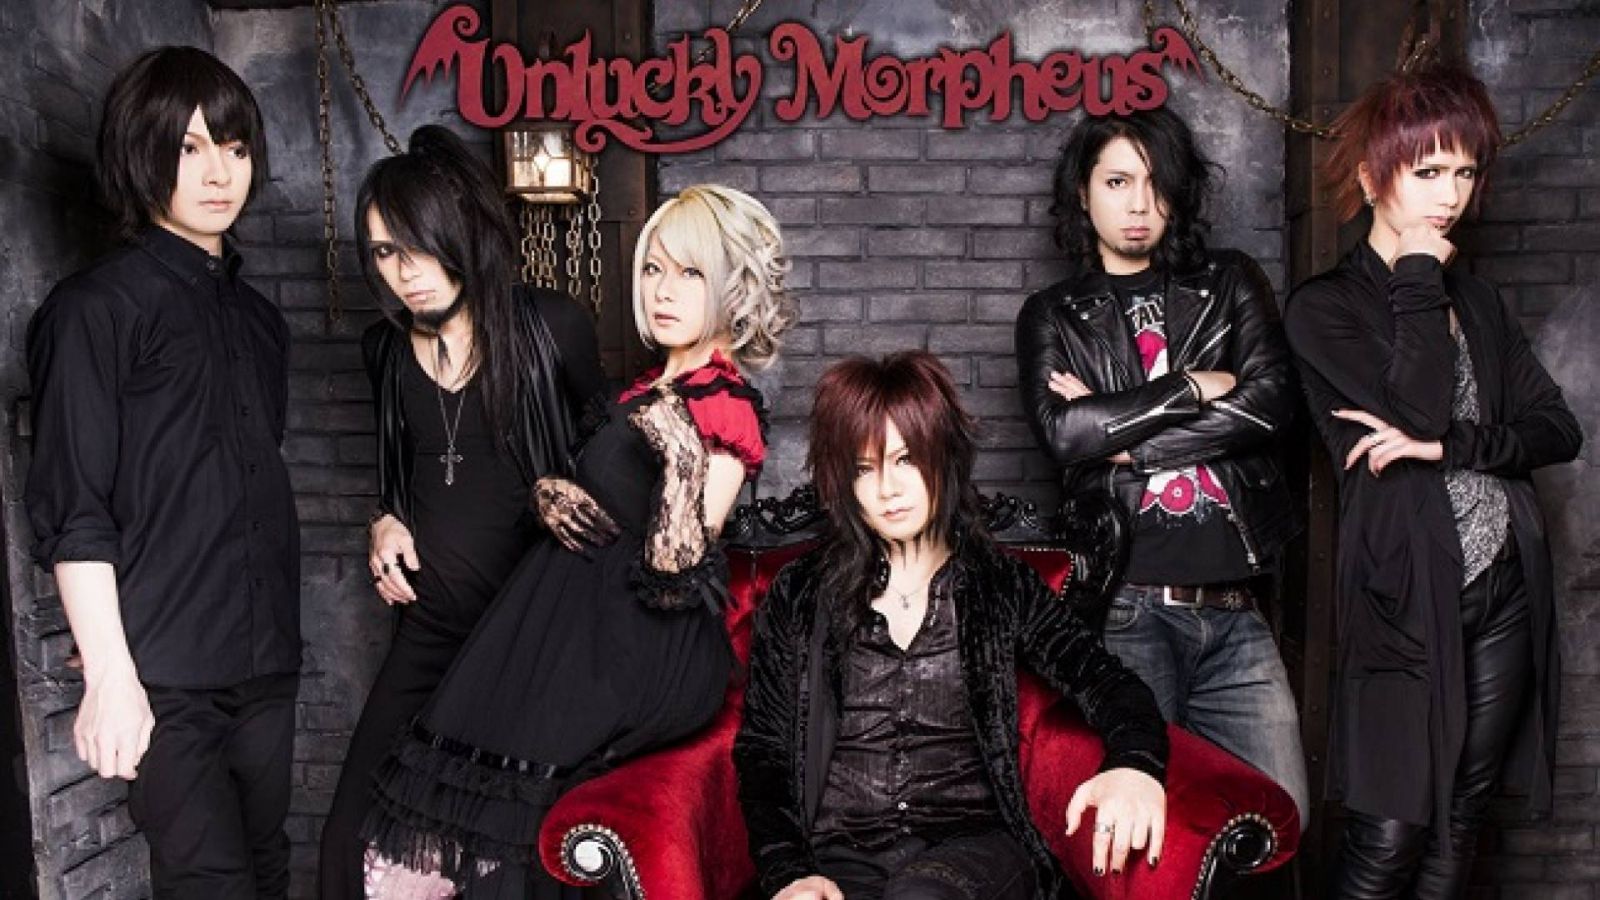 Detalles sobre el nuevo mini-álbum de Unlucky Morpheus © 2015 Unlucky Morpheus